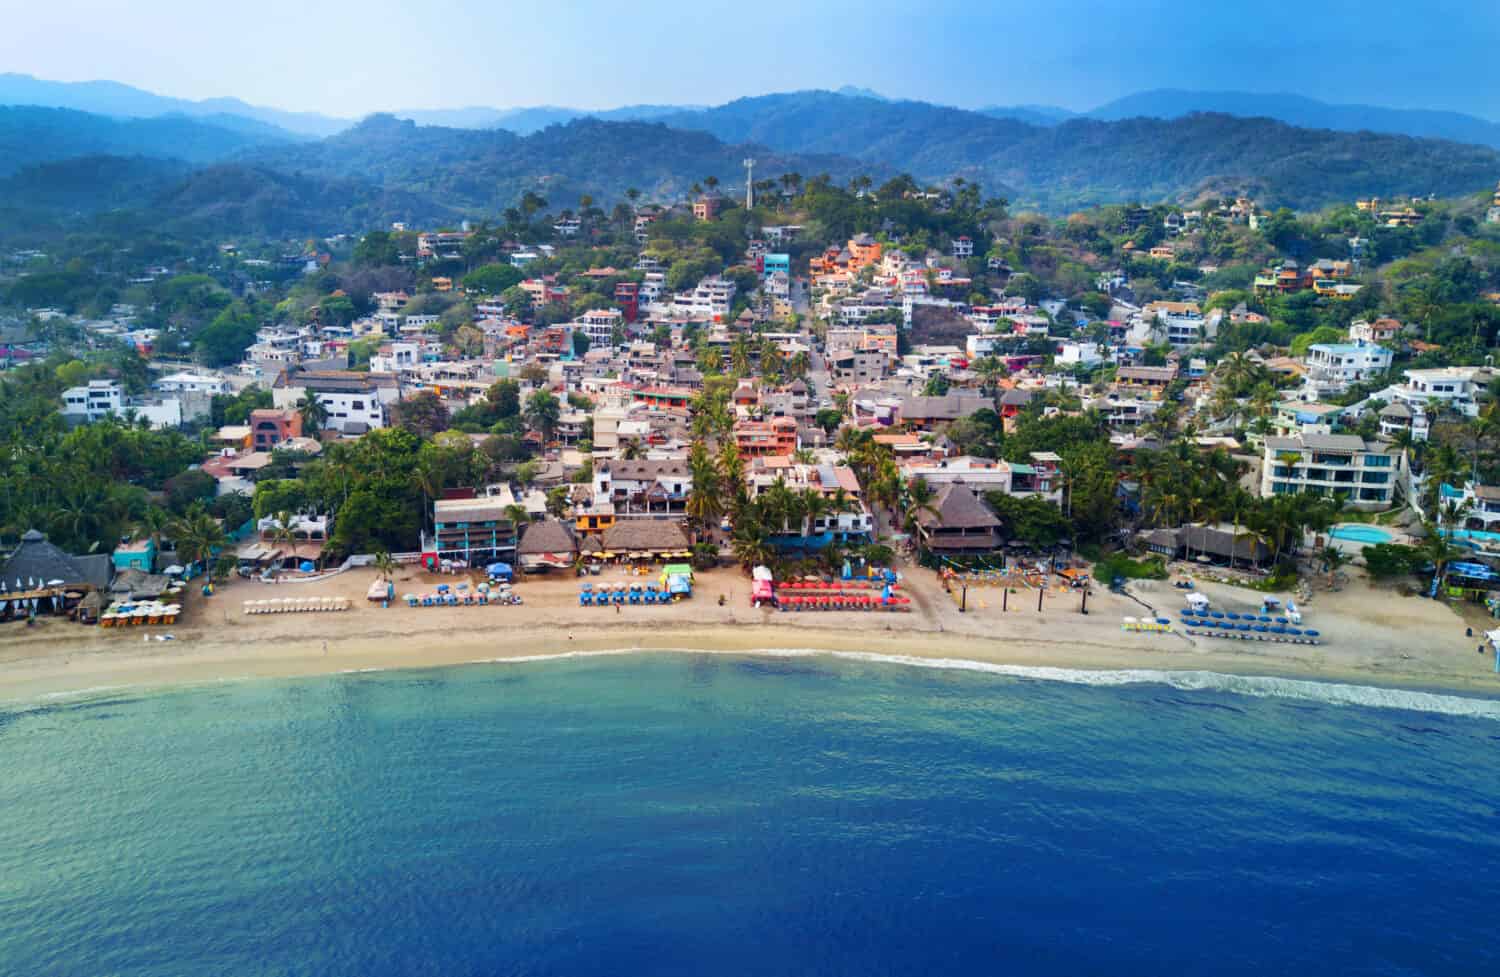 Aerial view of Sayulita Mexico's main beach